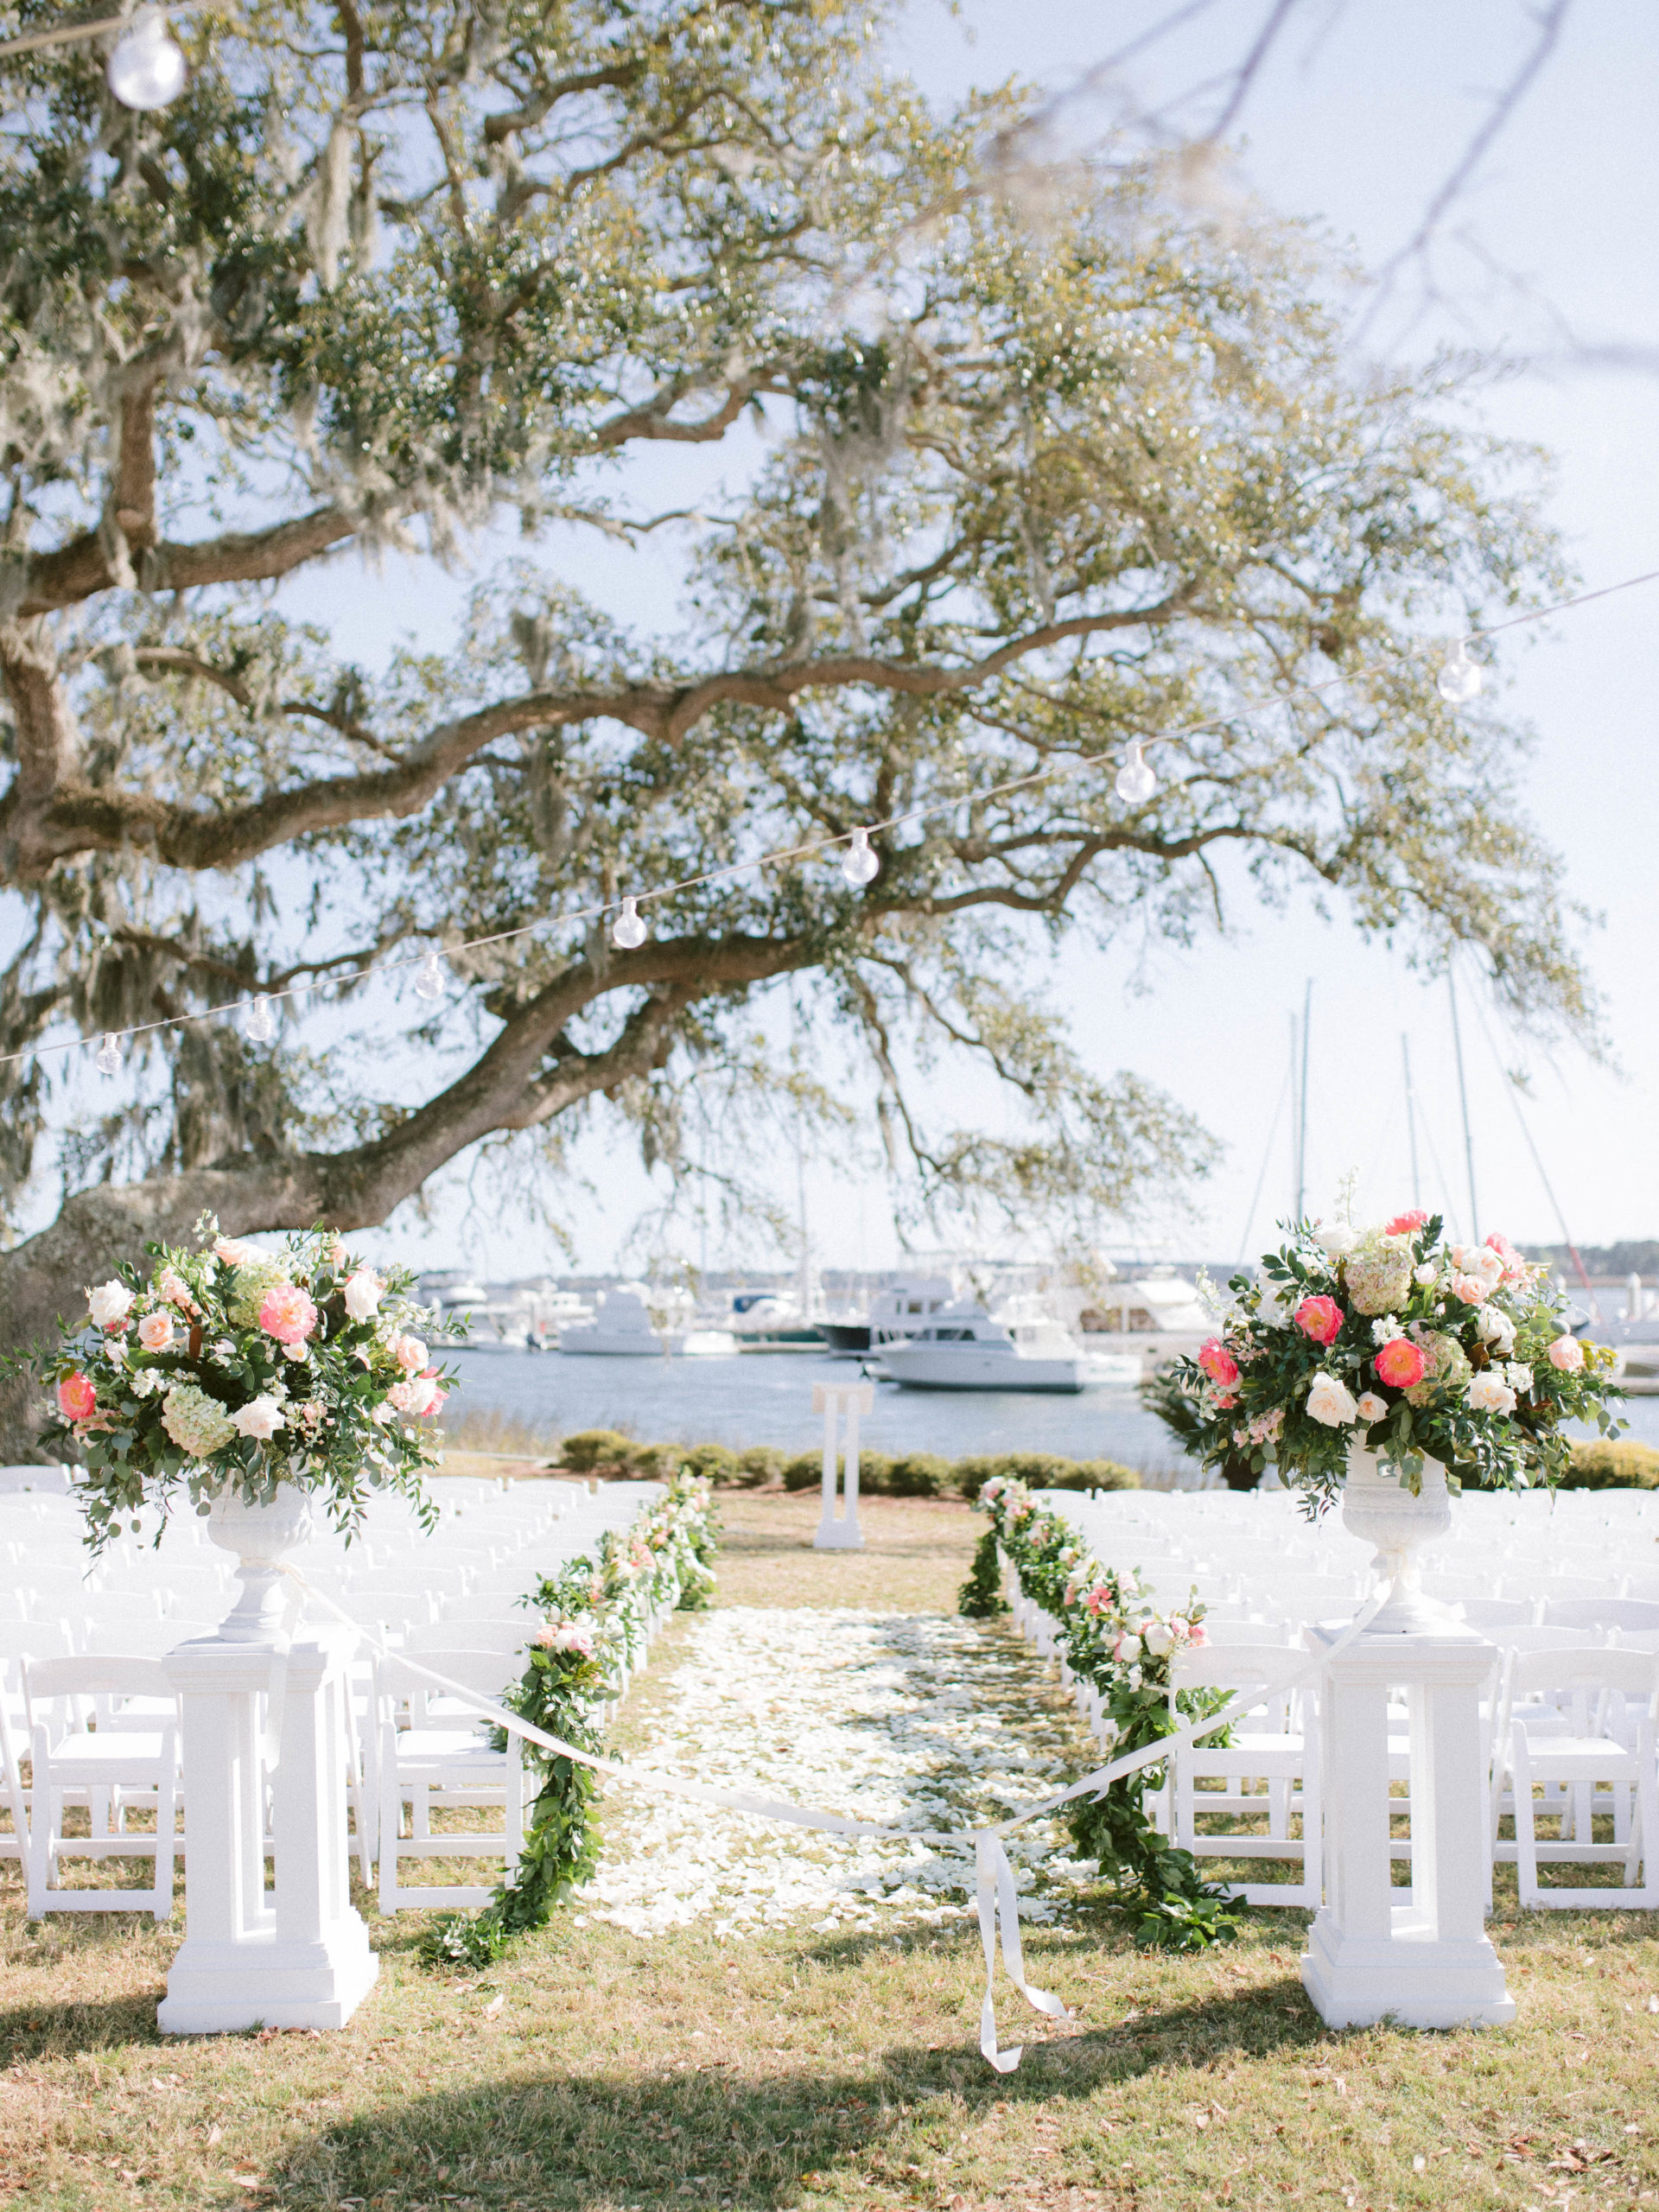 Savannah Yacht Club wedding ceremony designed by Tara Skinner Events